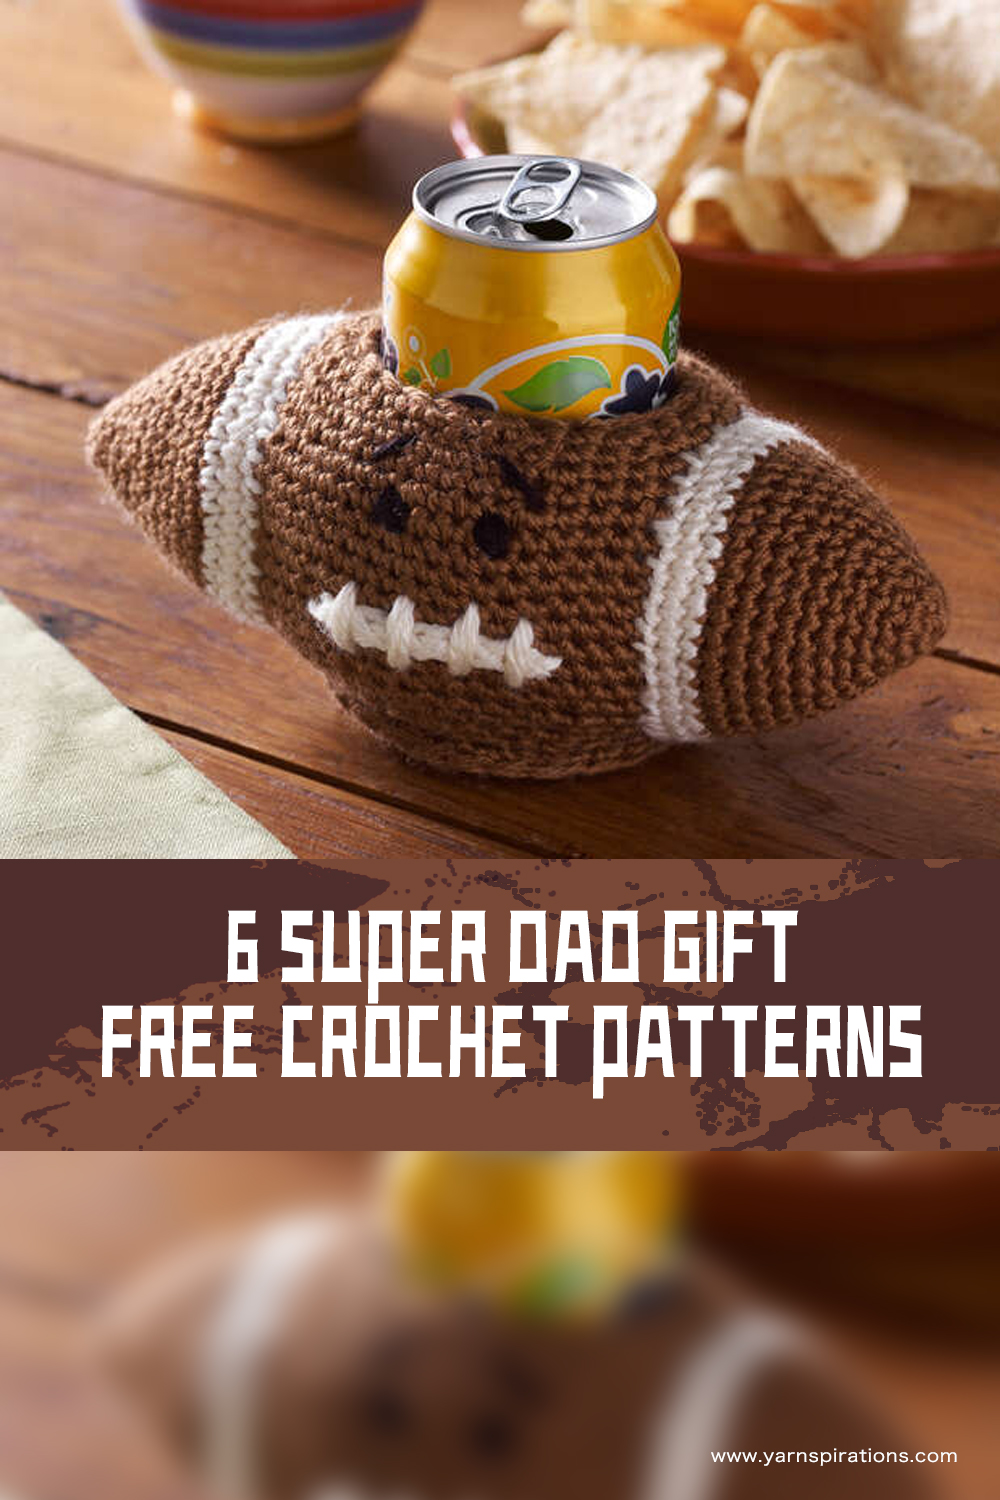 6 Super Dad Gift FREE Crochet Patterns